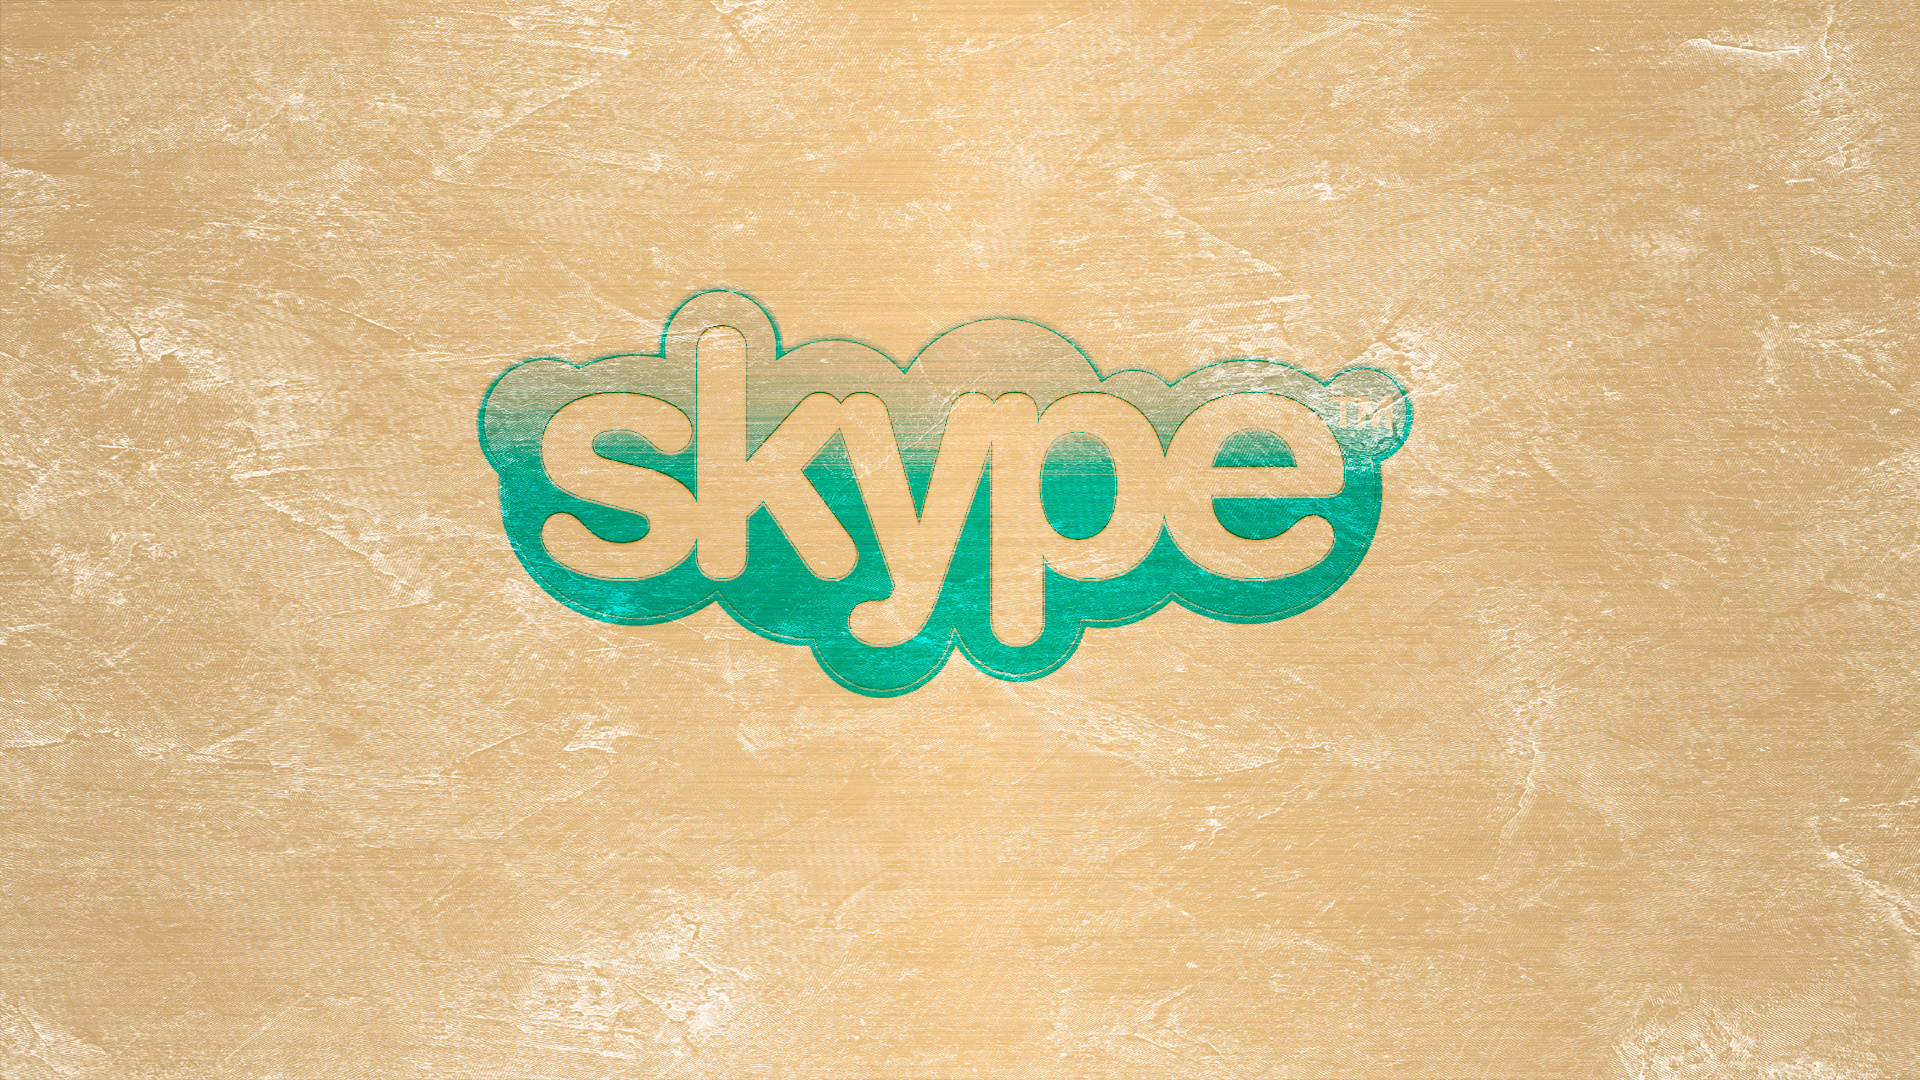 Descargar fondos de escritorio de Skype HD